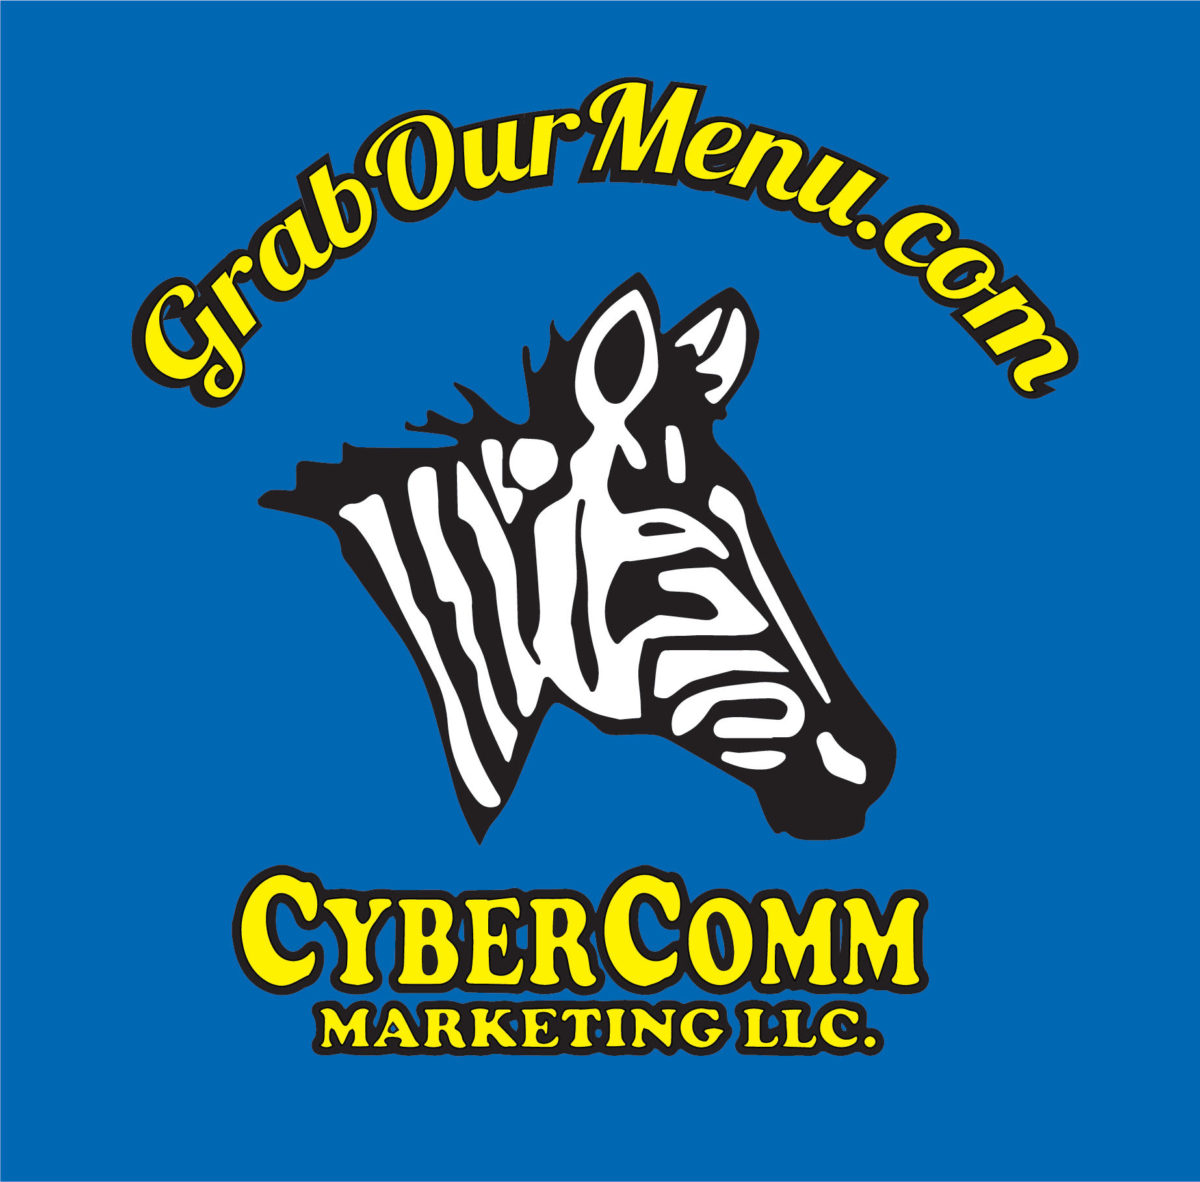 An online menu service by GrabOurMenu.com & CyberComm Marketing, LLC